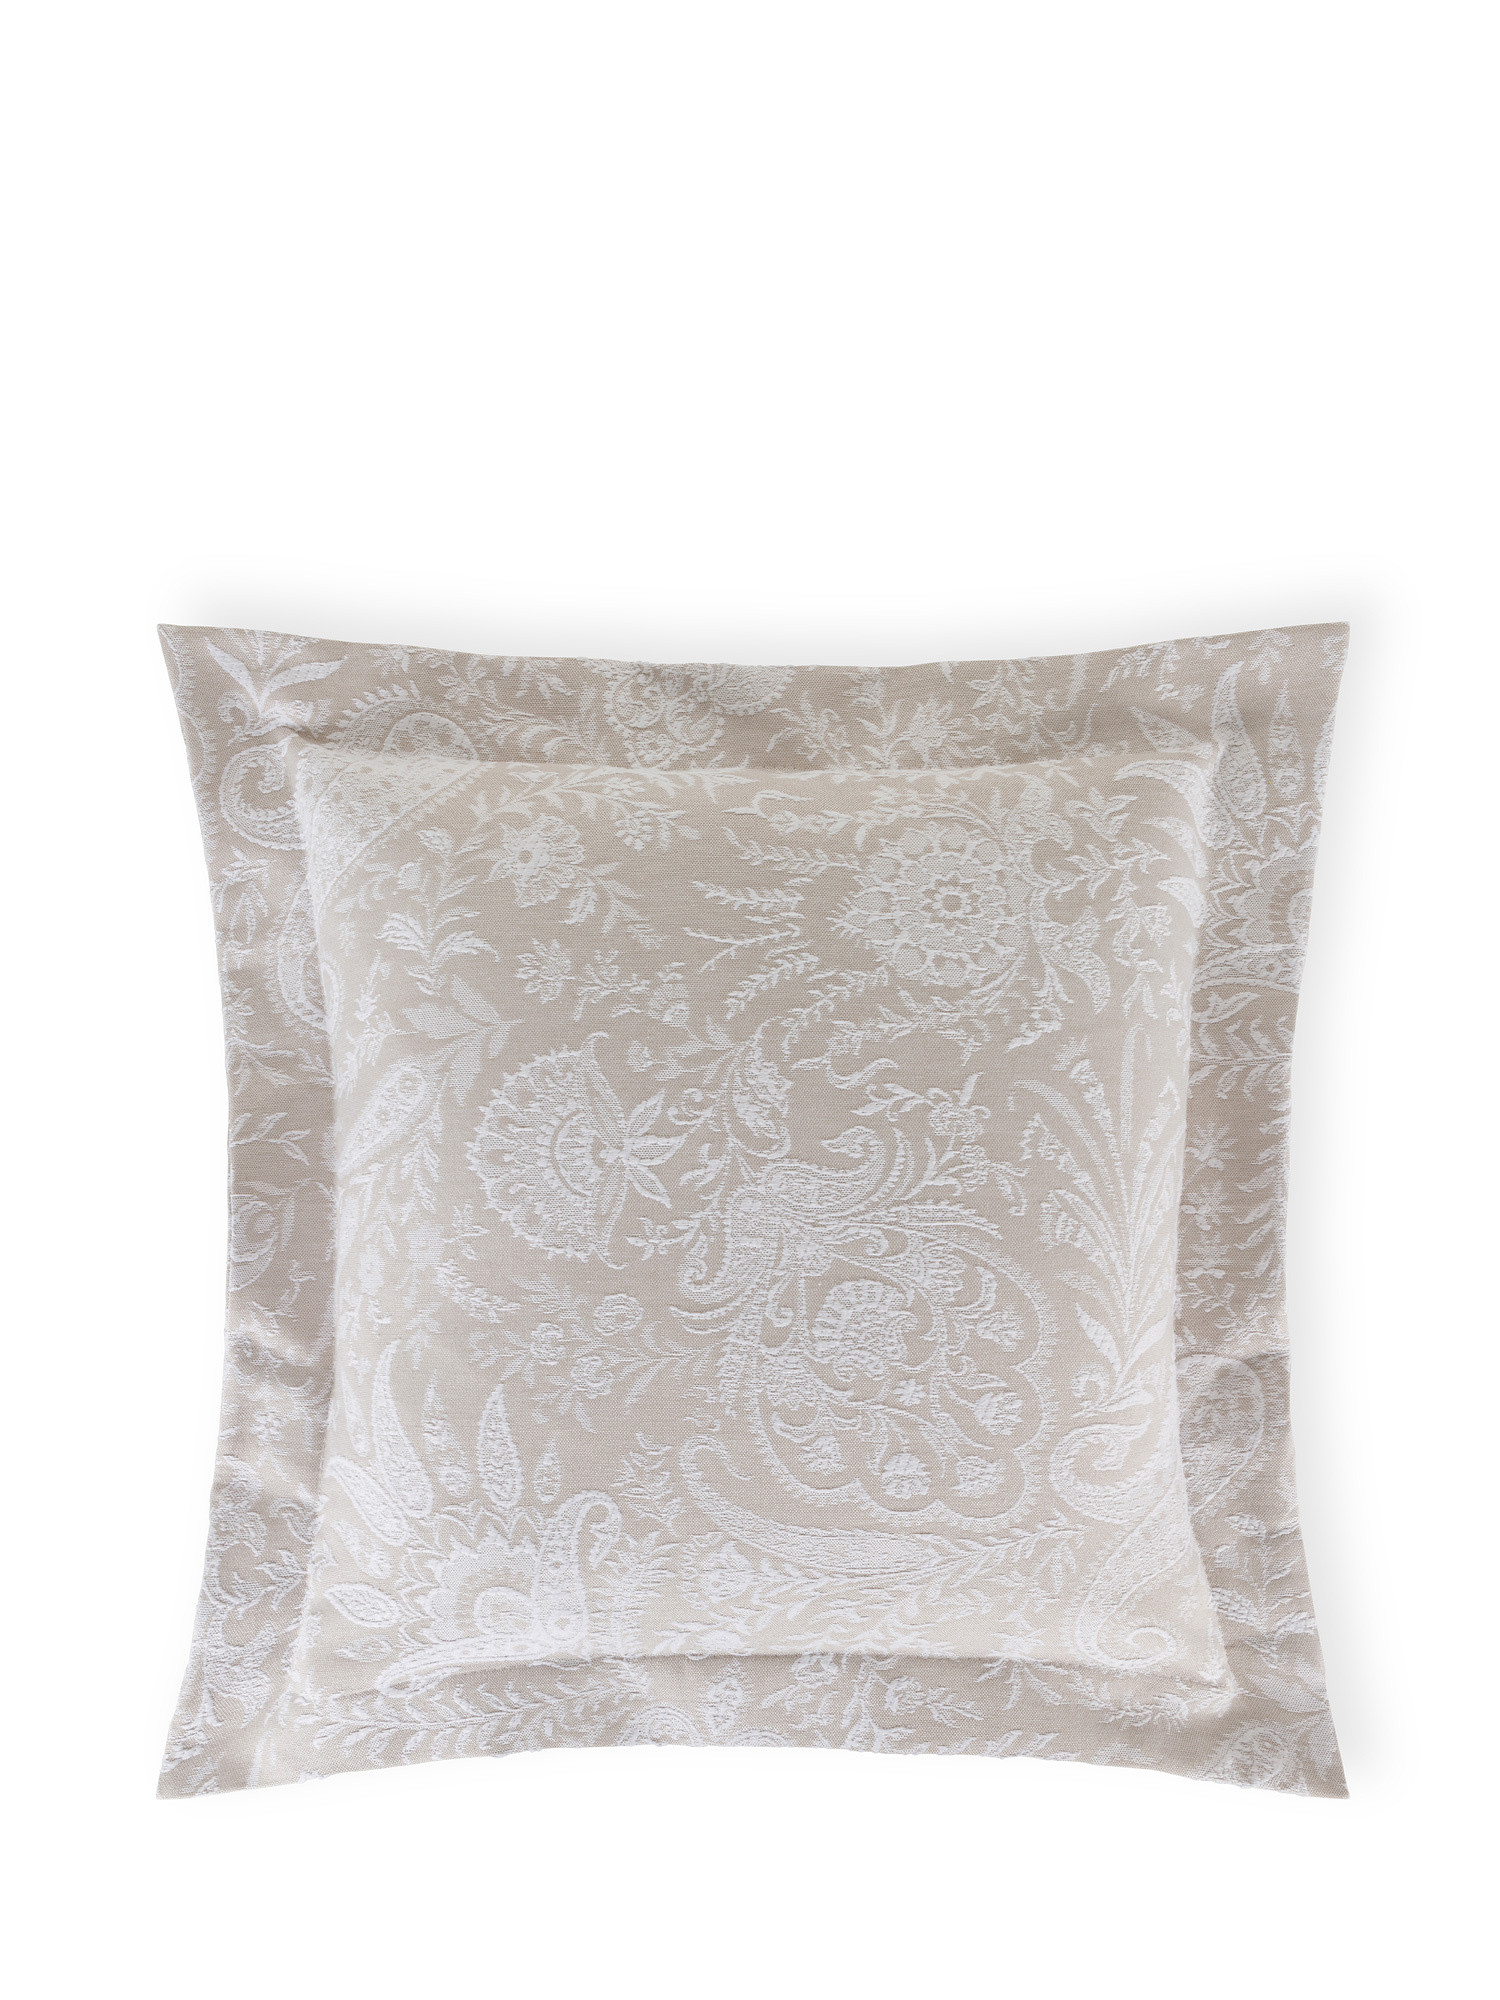 Portofino cushion with paisley pattern, Beige, large image number 0